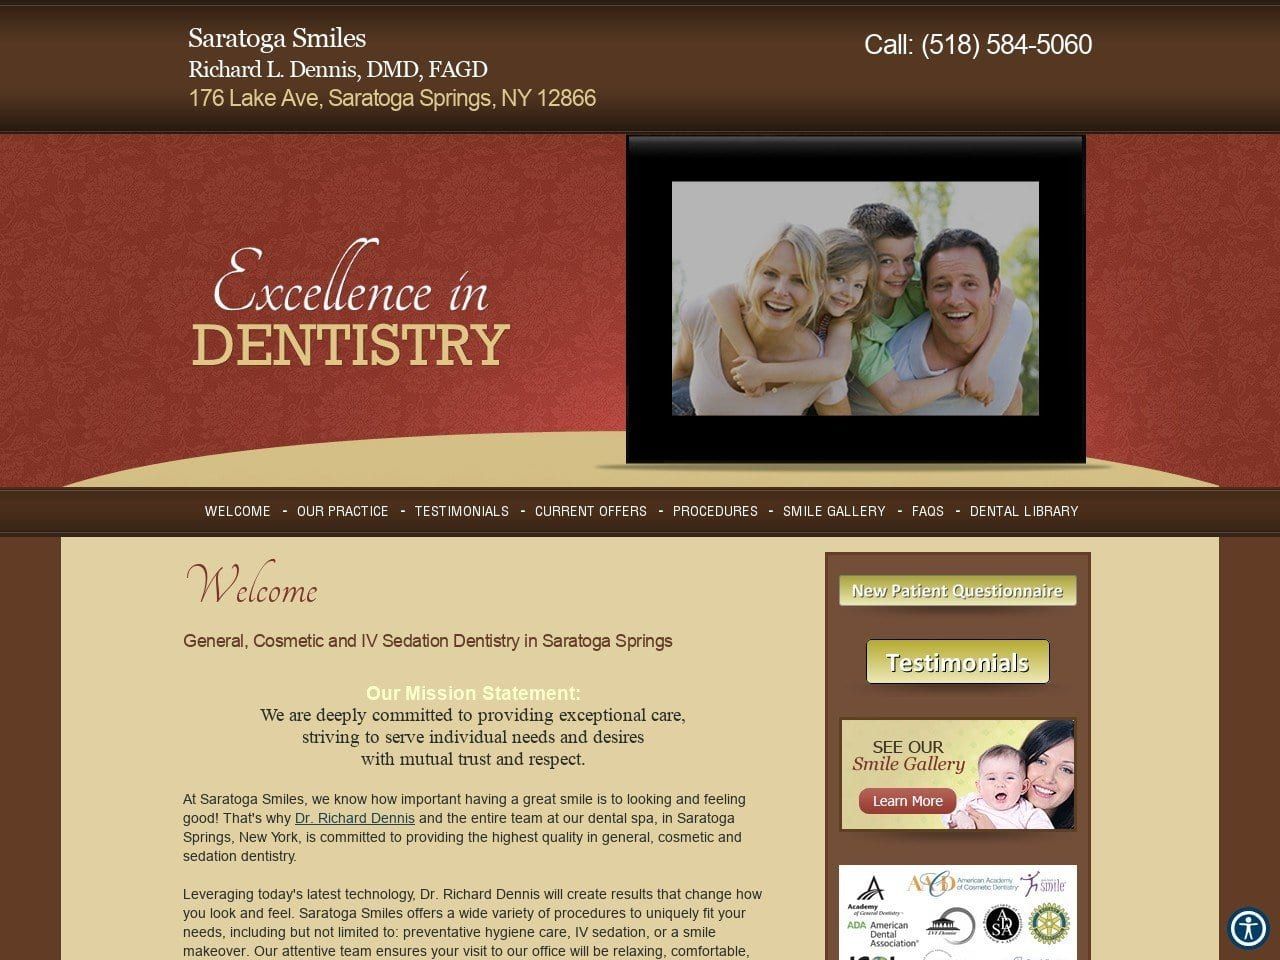 Saratoga Smiles | Richard L. Dennis DMD FAGD Website Screenshot from saratogasmiles.com